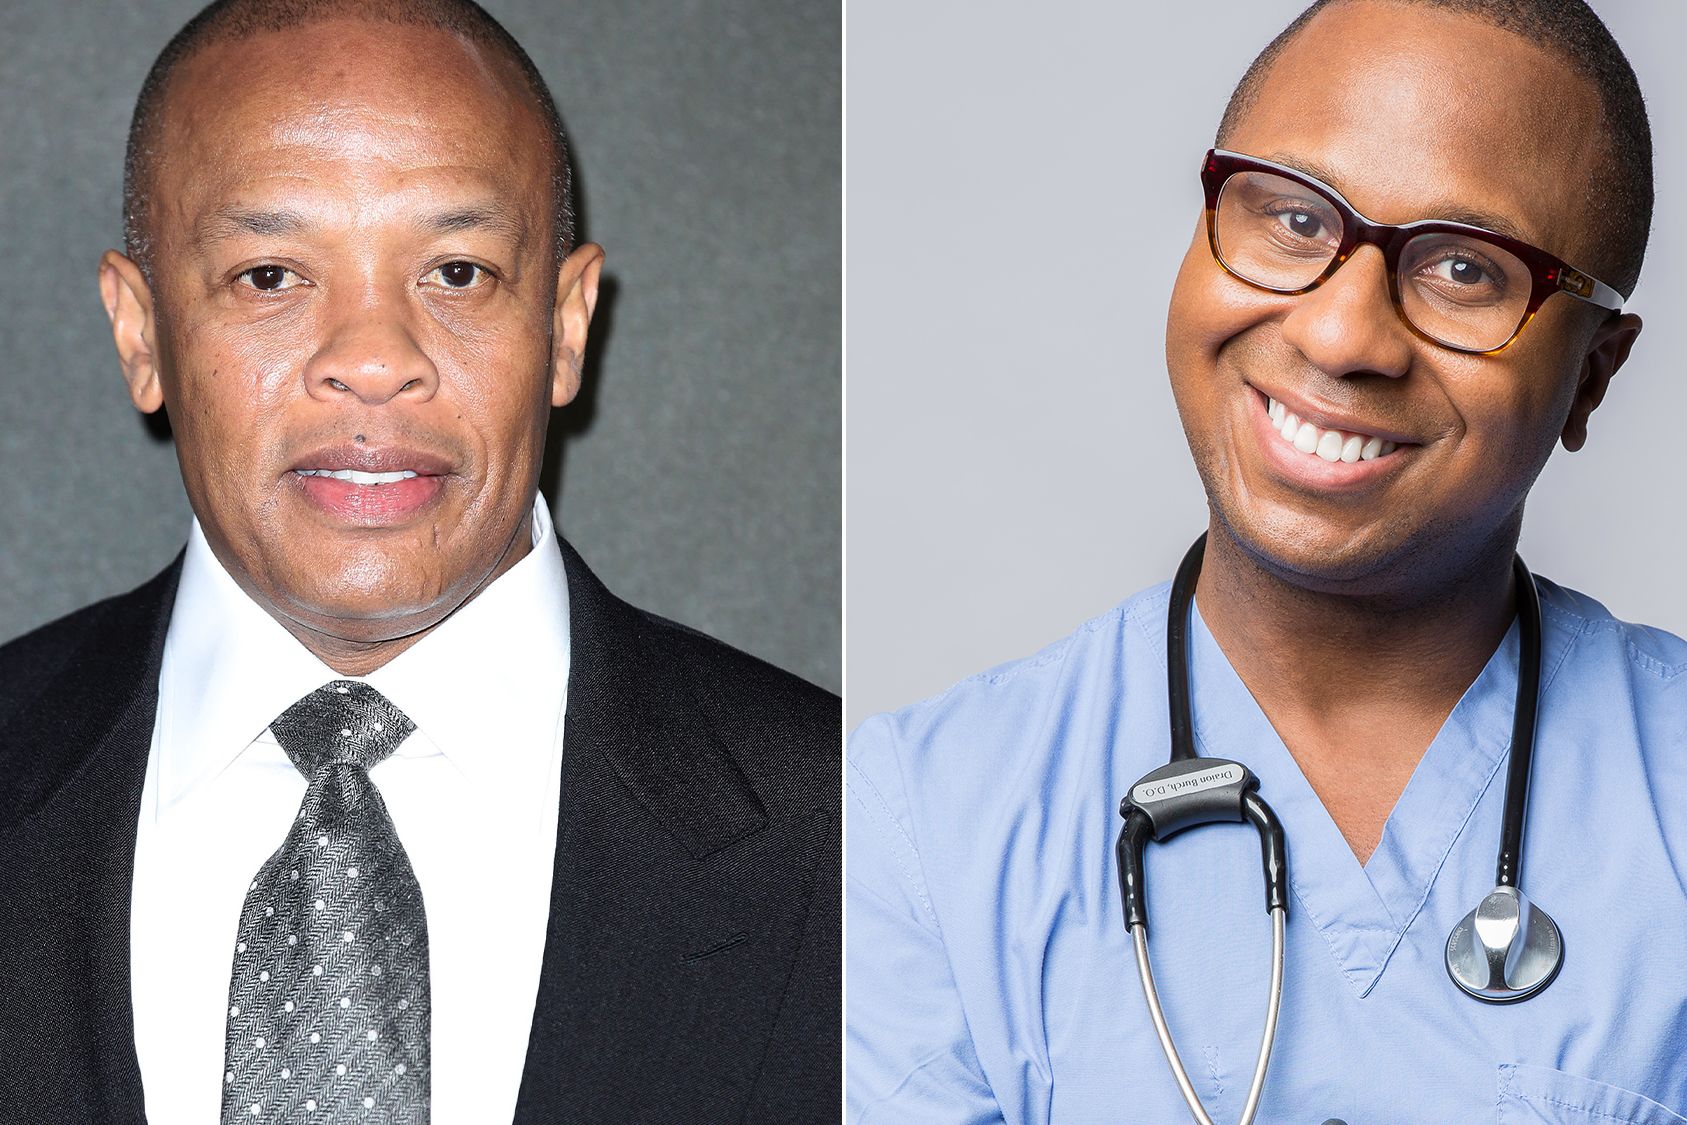 Rapper Dr. Dre loses a trademark dispute with ob/gyn Dr. Drai | CNN